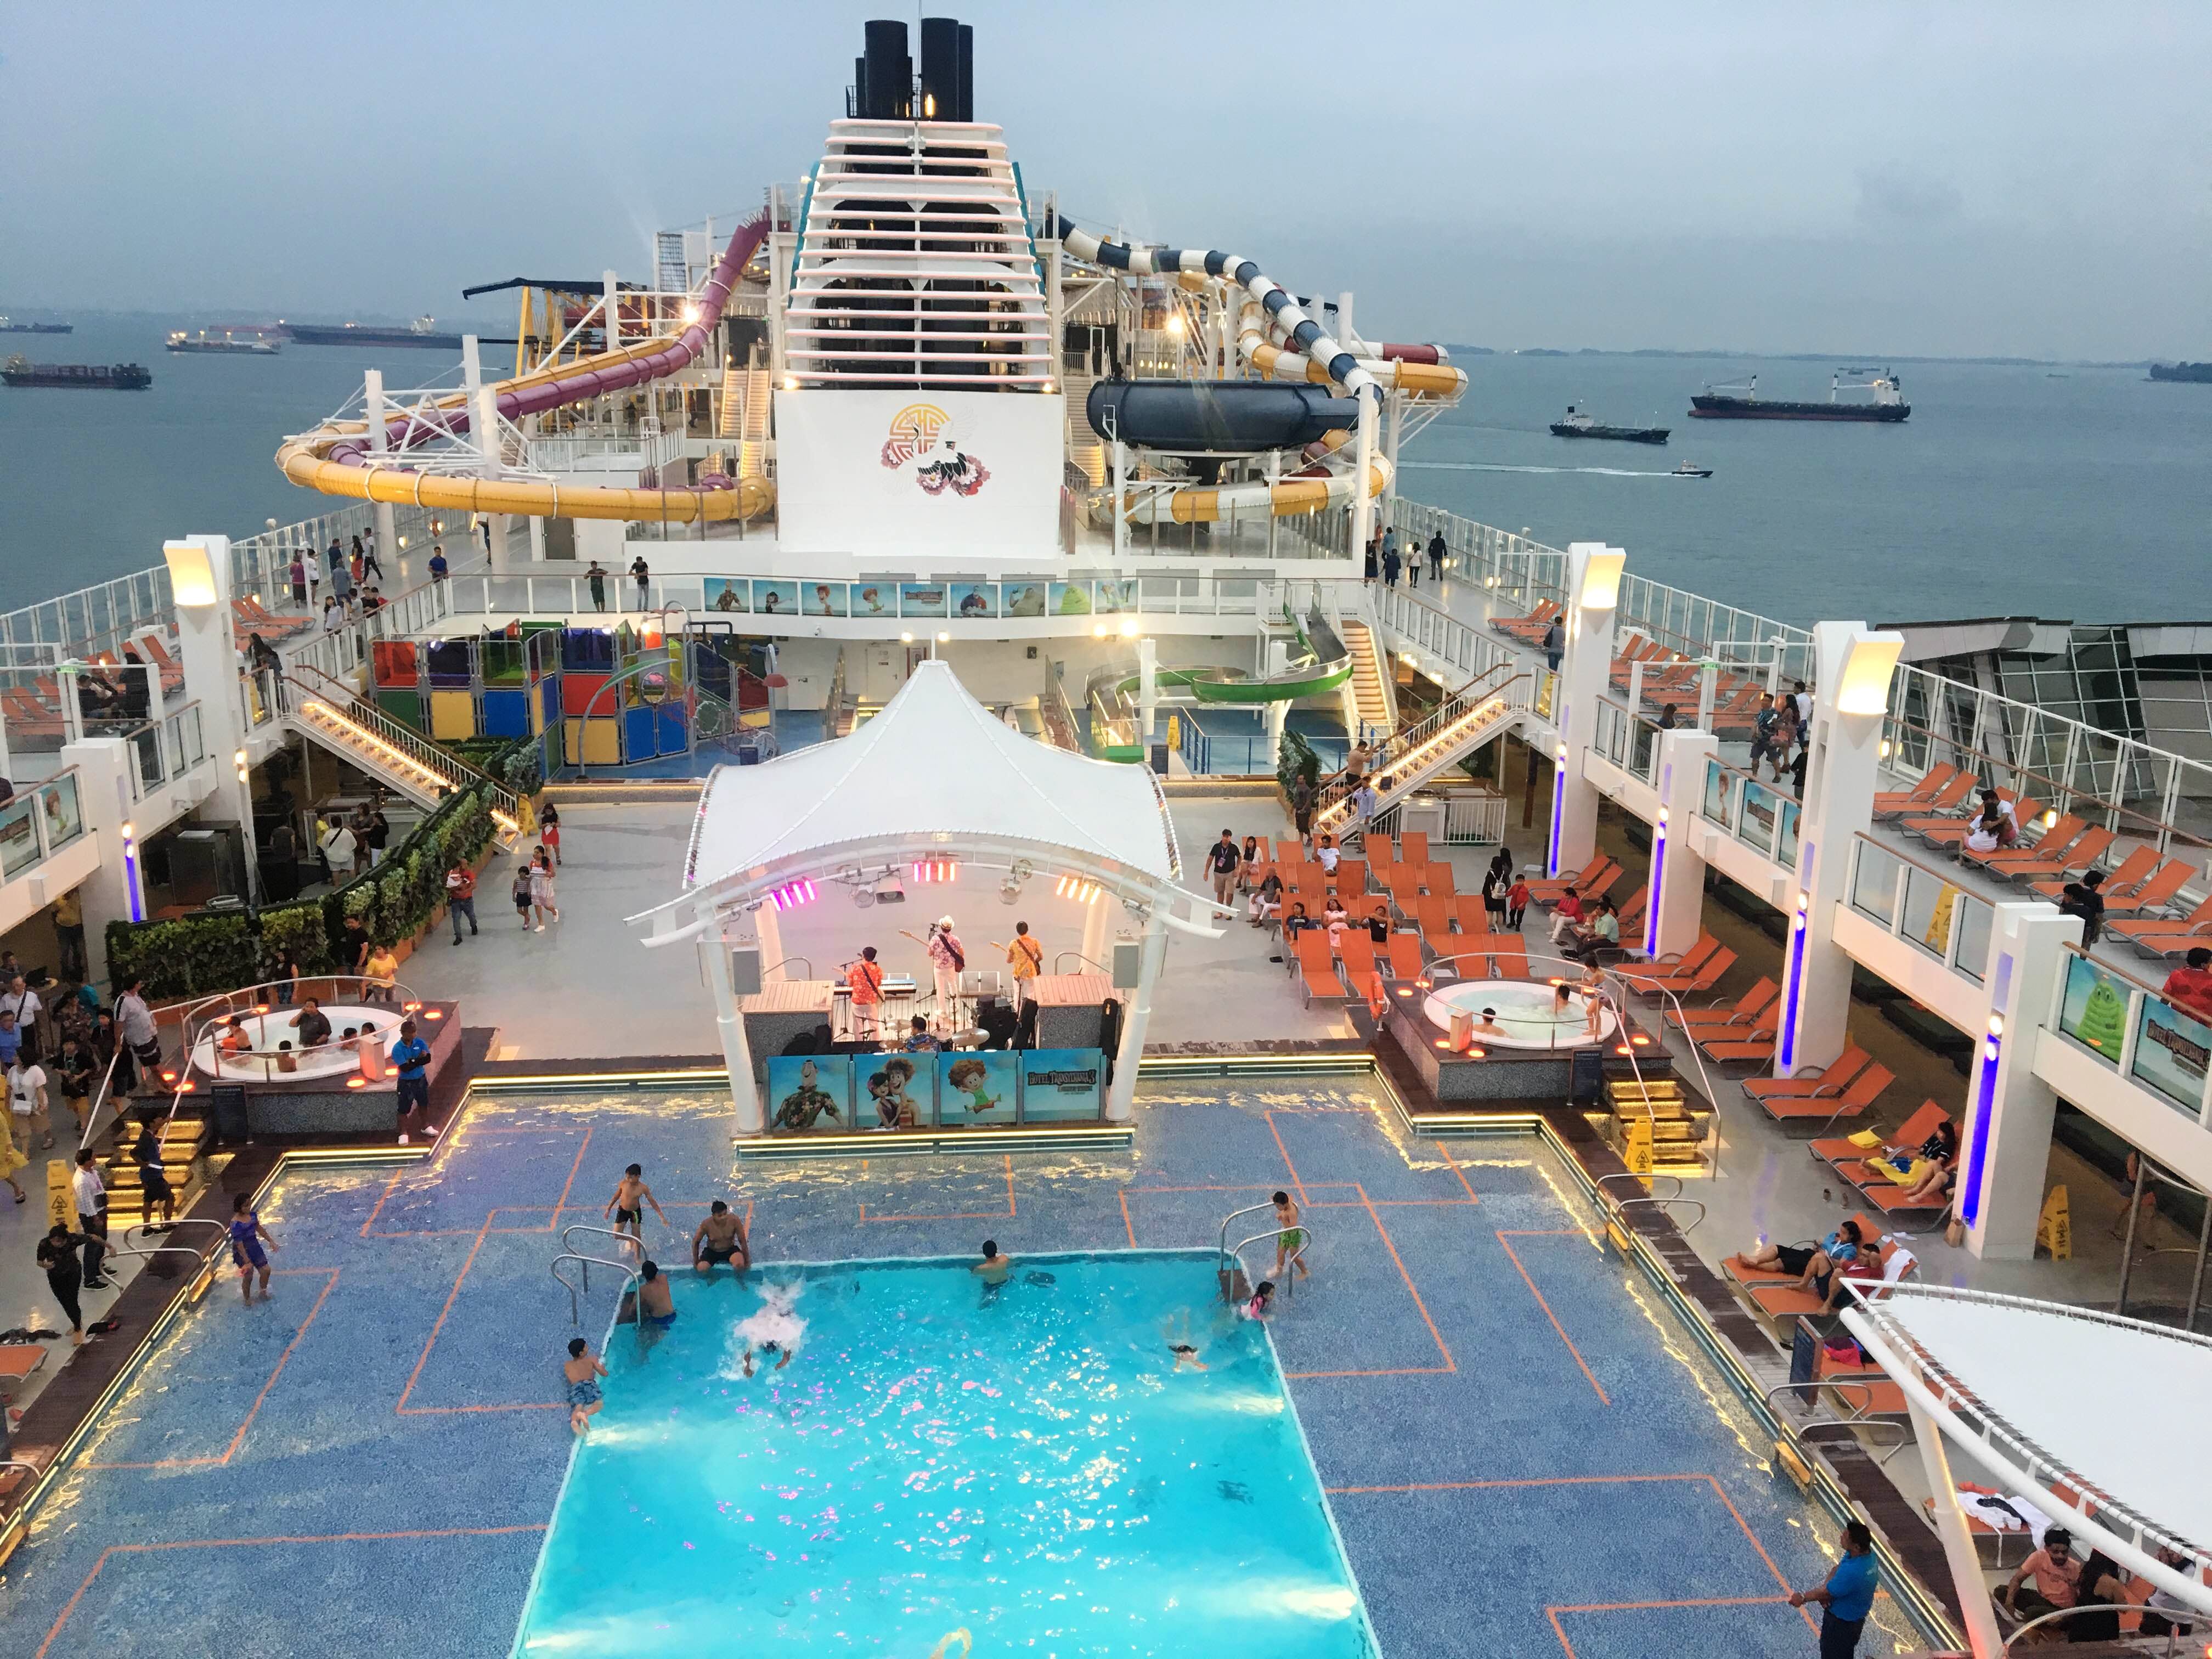 Ship,Swimming pool,Vehicle,Cruise ship,Watercraft,Vacation,Passenger ship,Tourism,Naval architecture,Deck